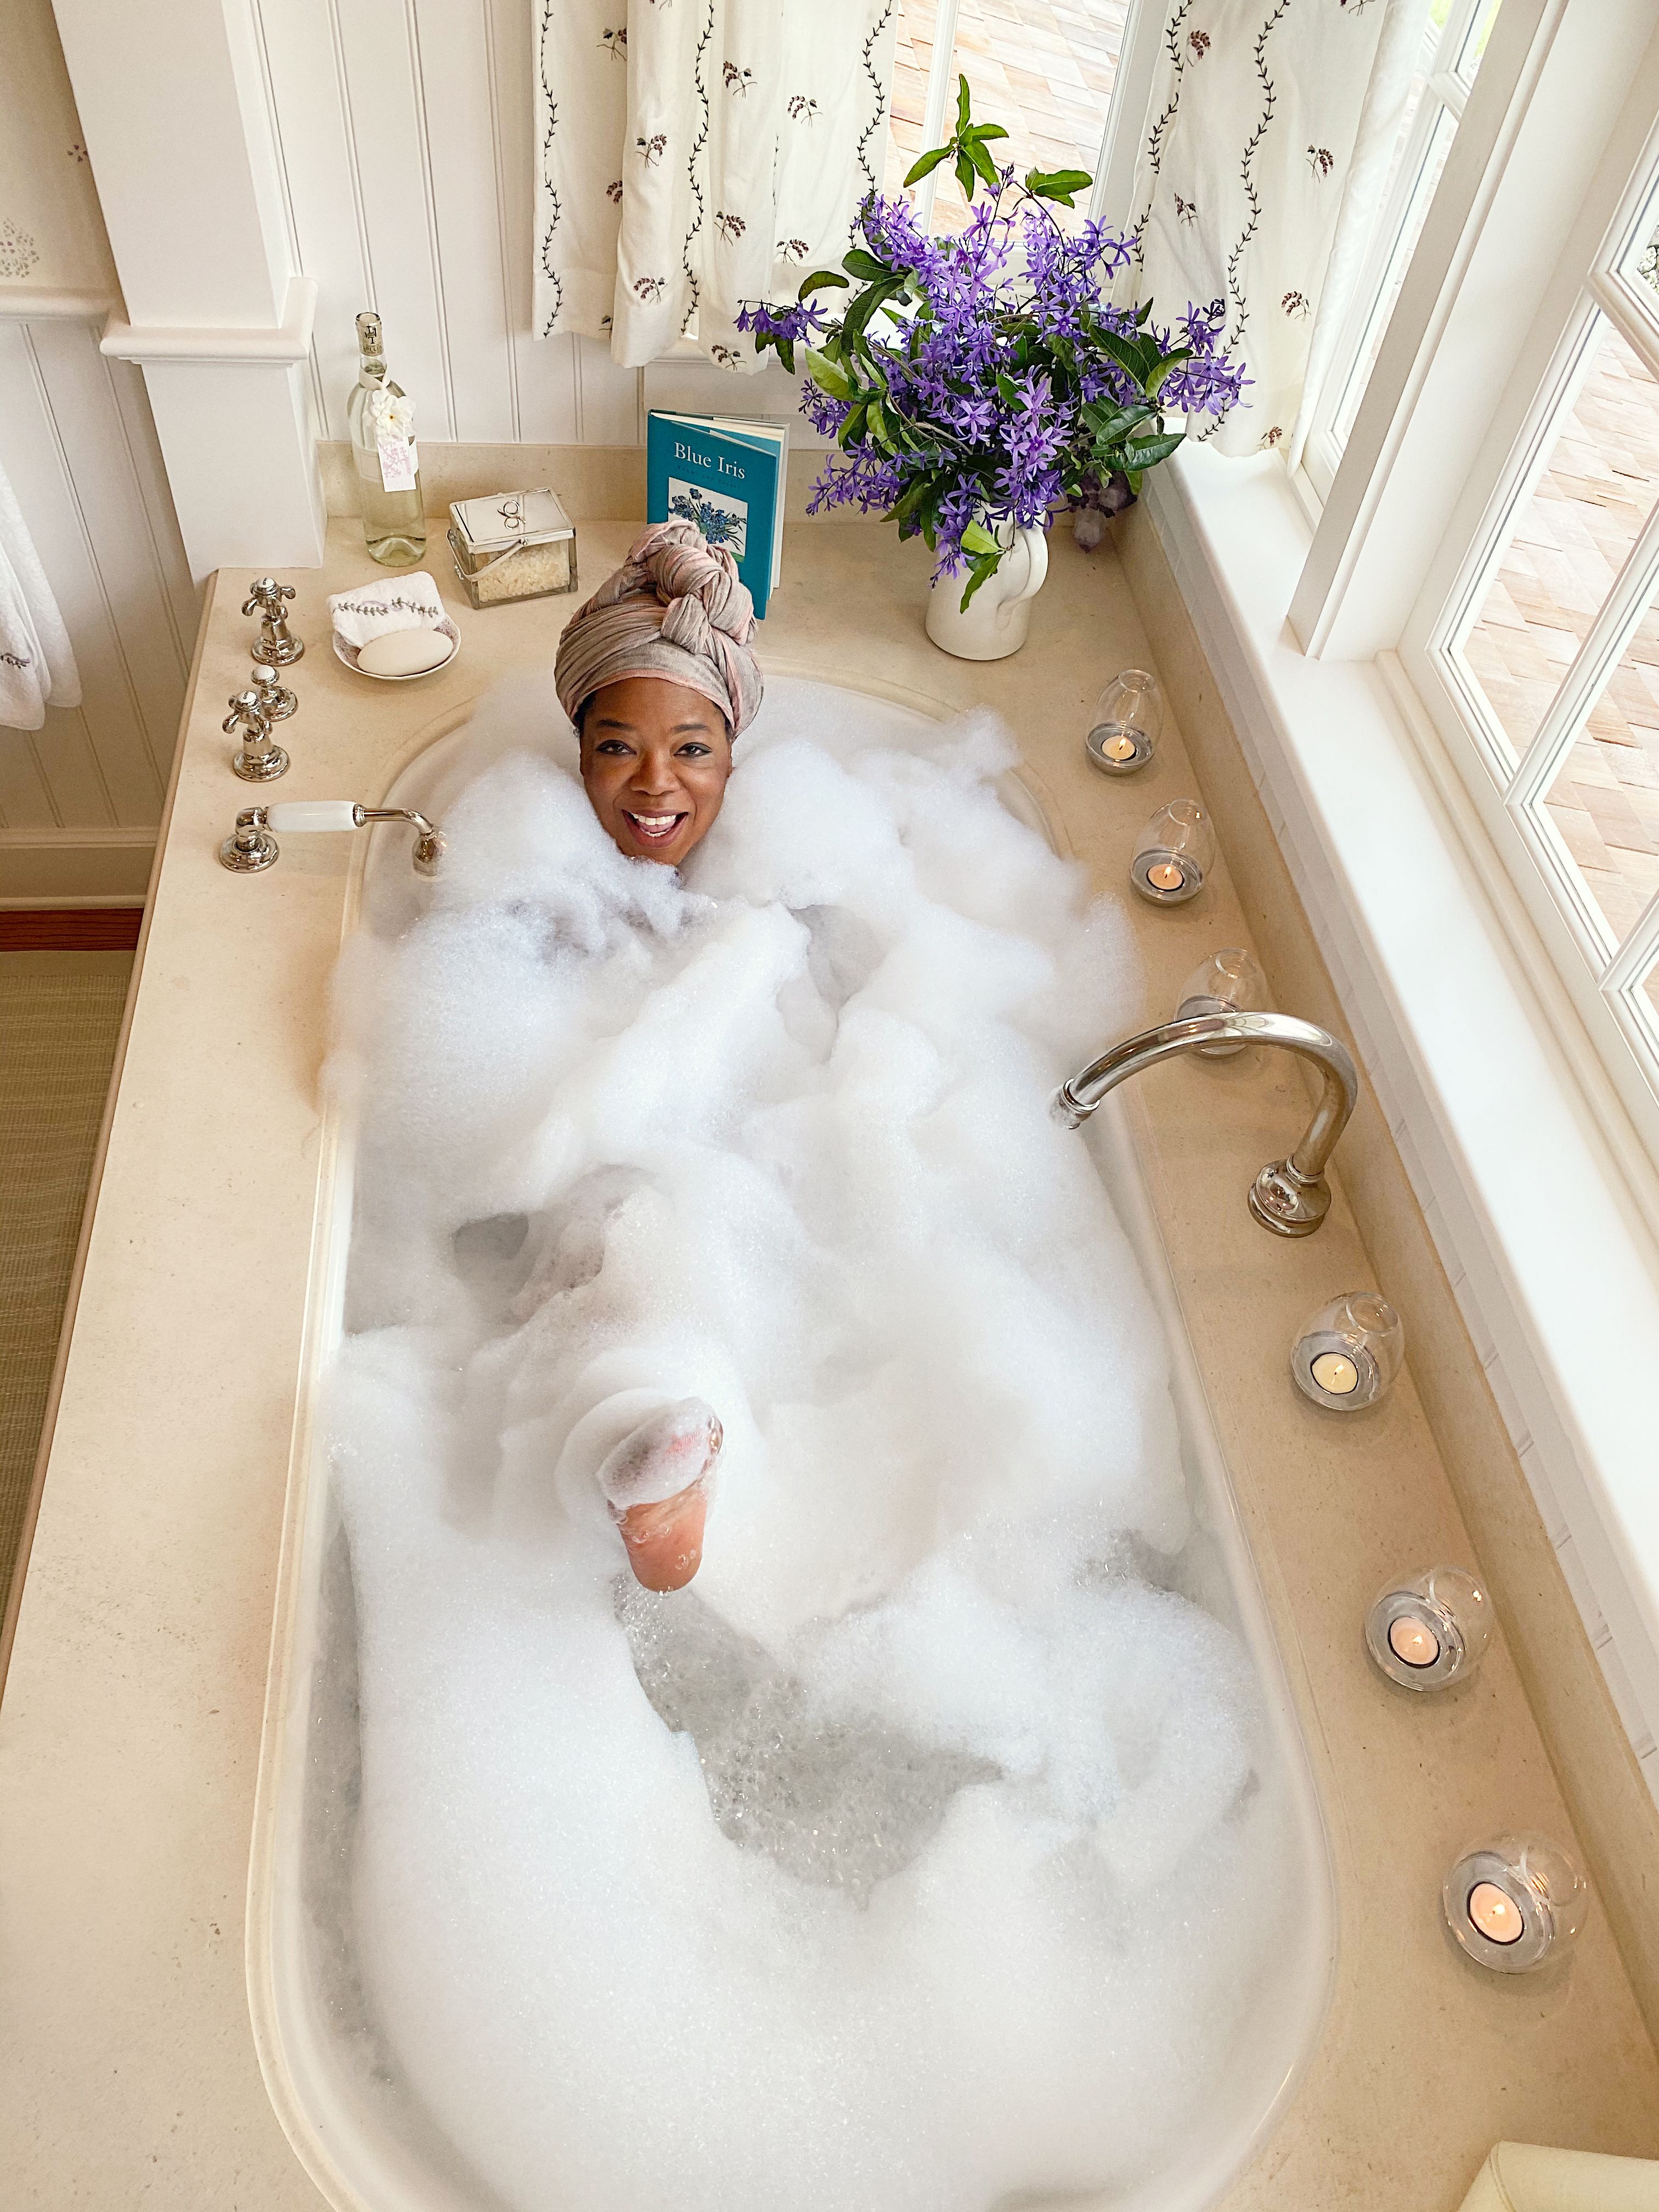 Oprah Reveals Her Bath Routine In, Why Did My Dog Get In The Bathtub